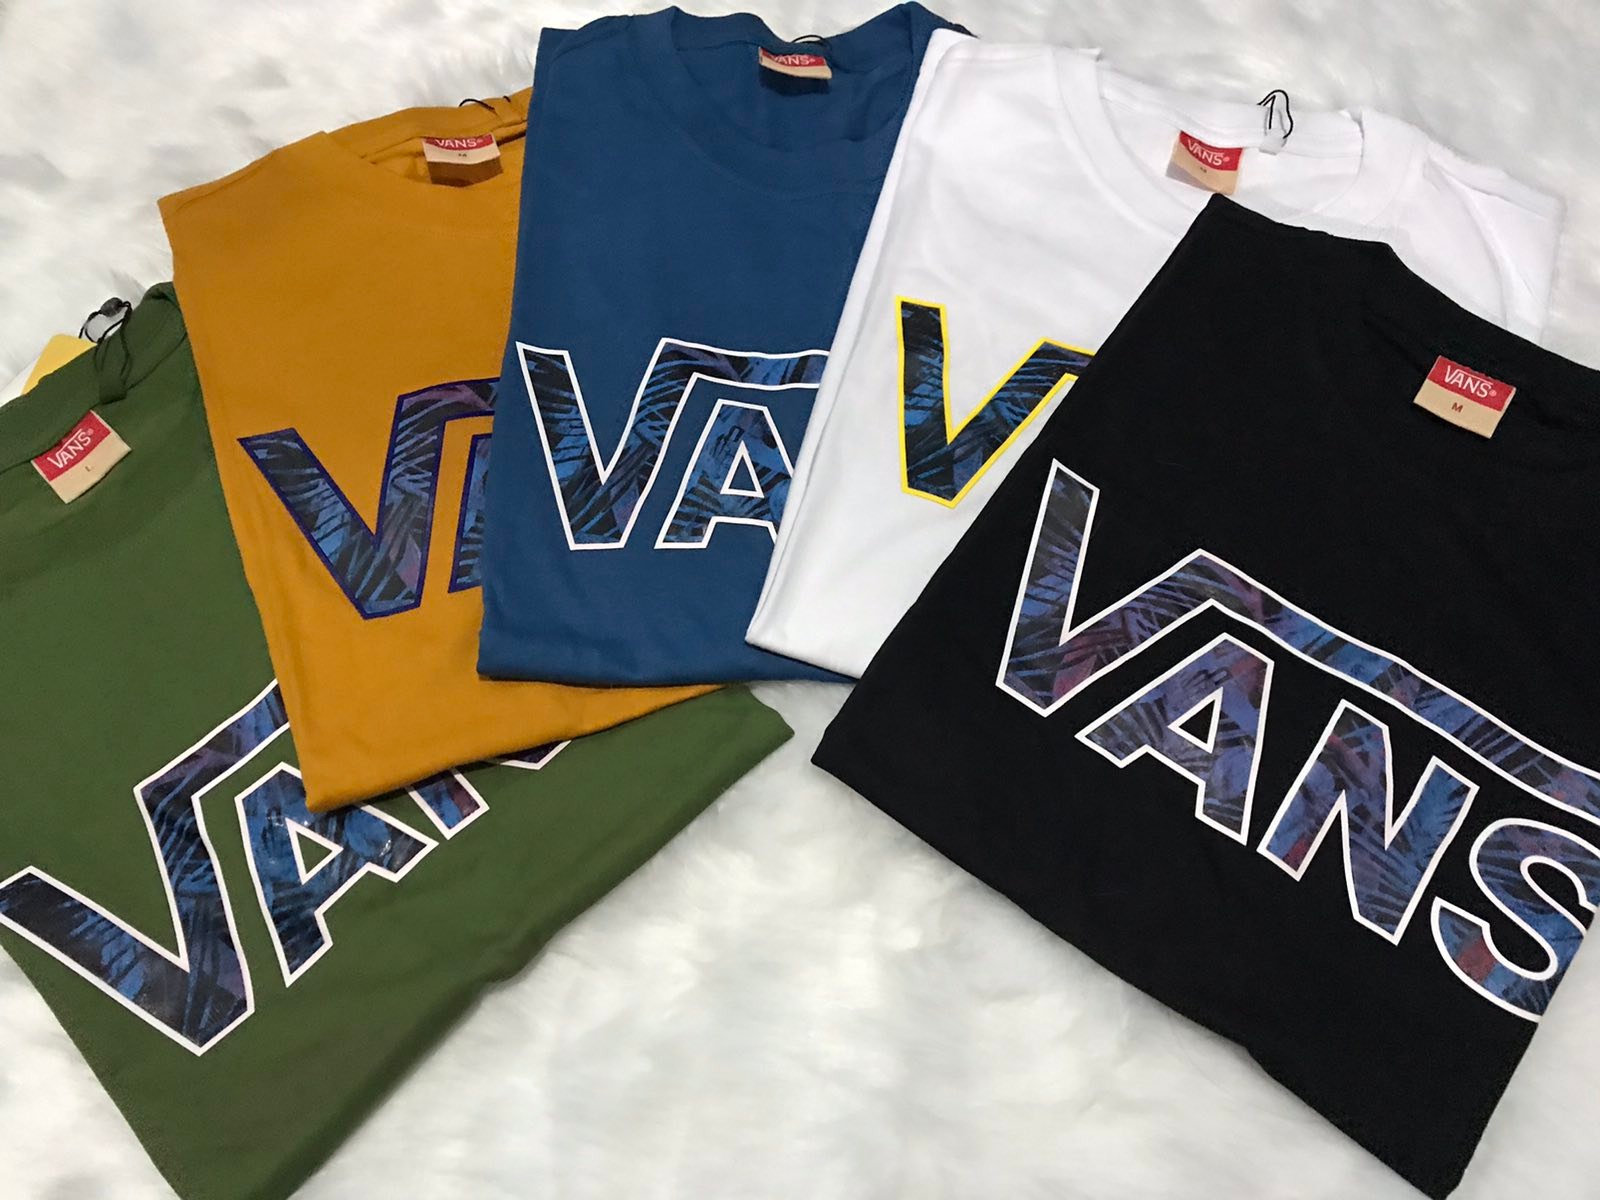 where to buy vans shirts